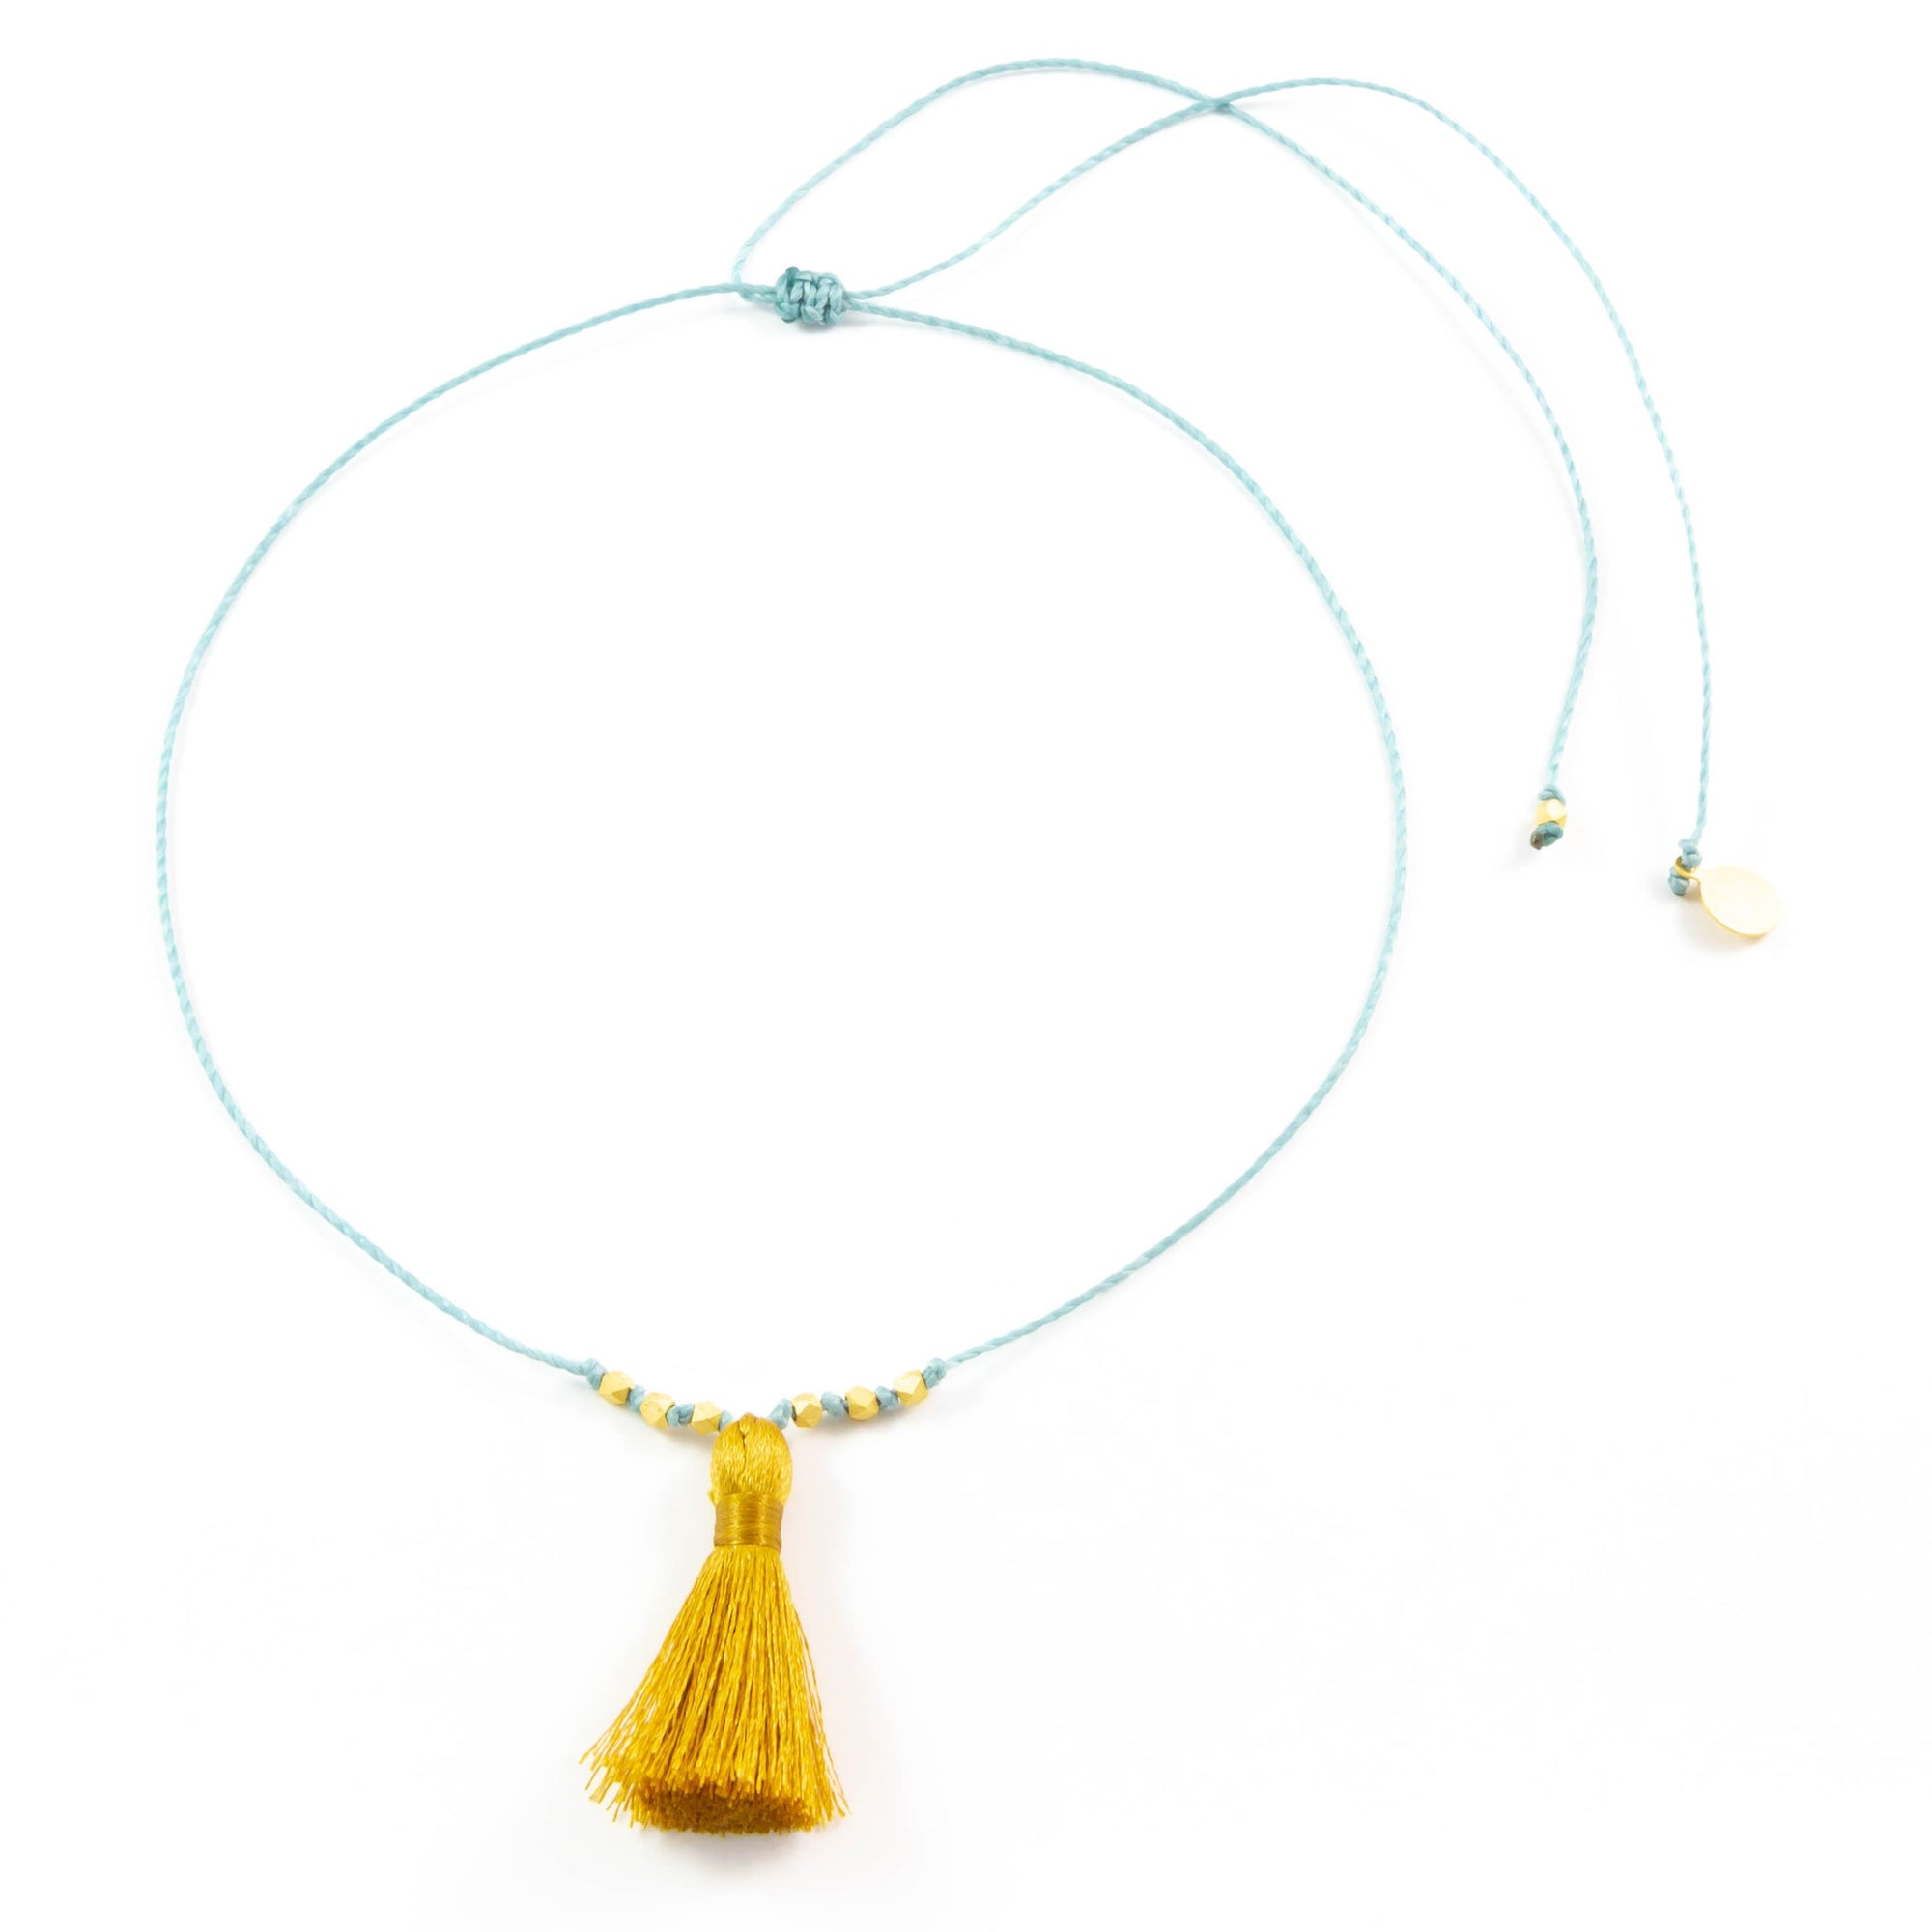 Stormy Ocean w/ Mustard Tassel On a String Necklace in Gold